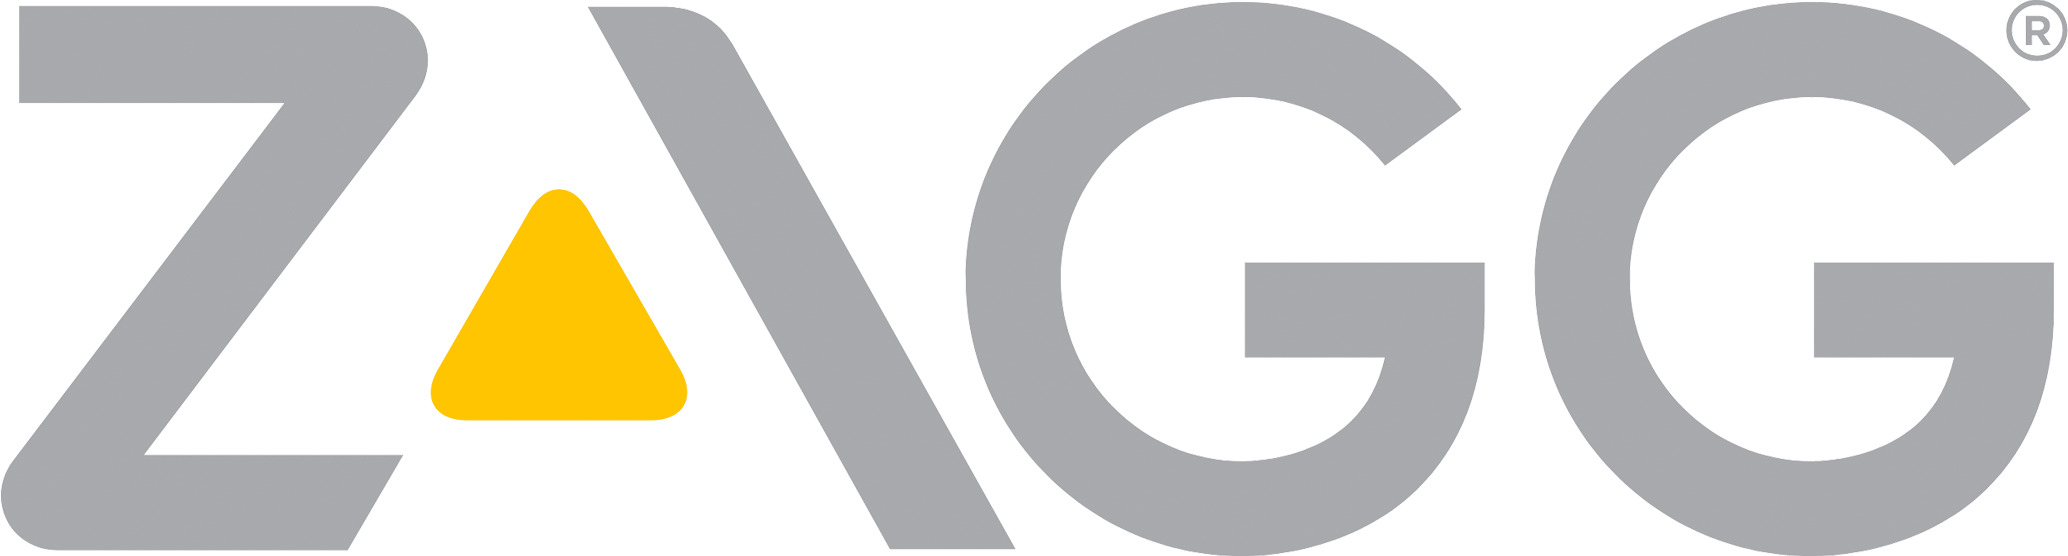 ZAGG Pro Stylus Black/Grey 109907068 for iPad